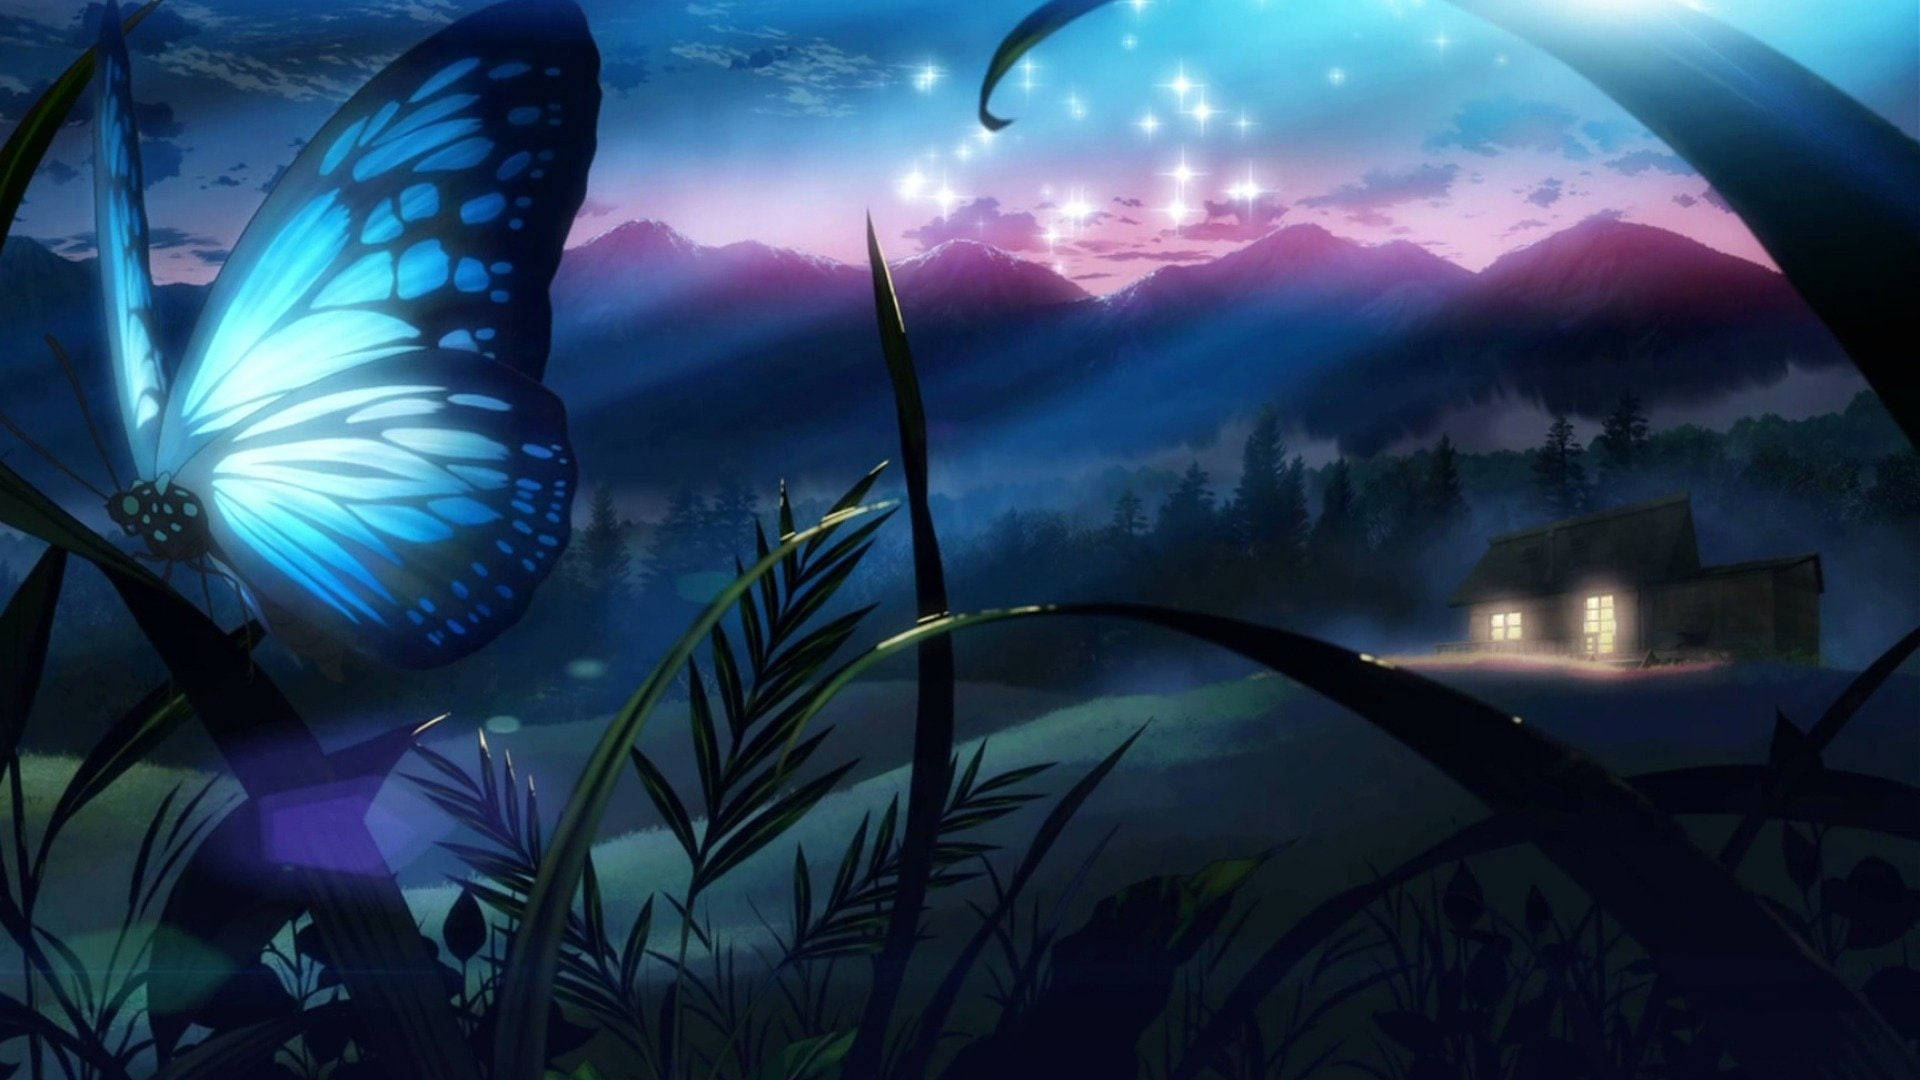 Night Butterfly On Foliage Wallpaper